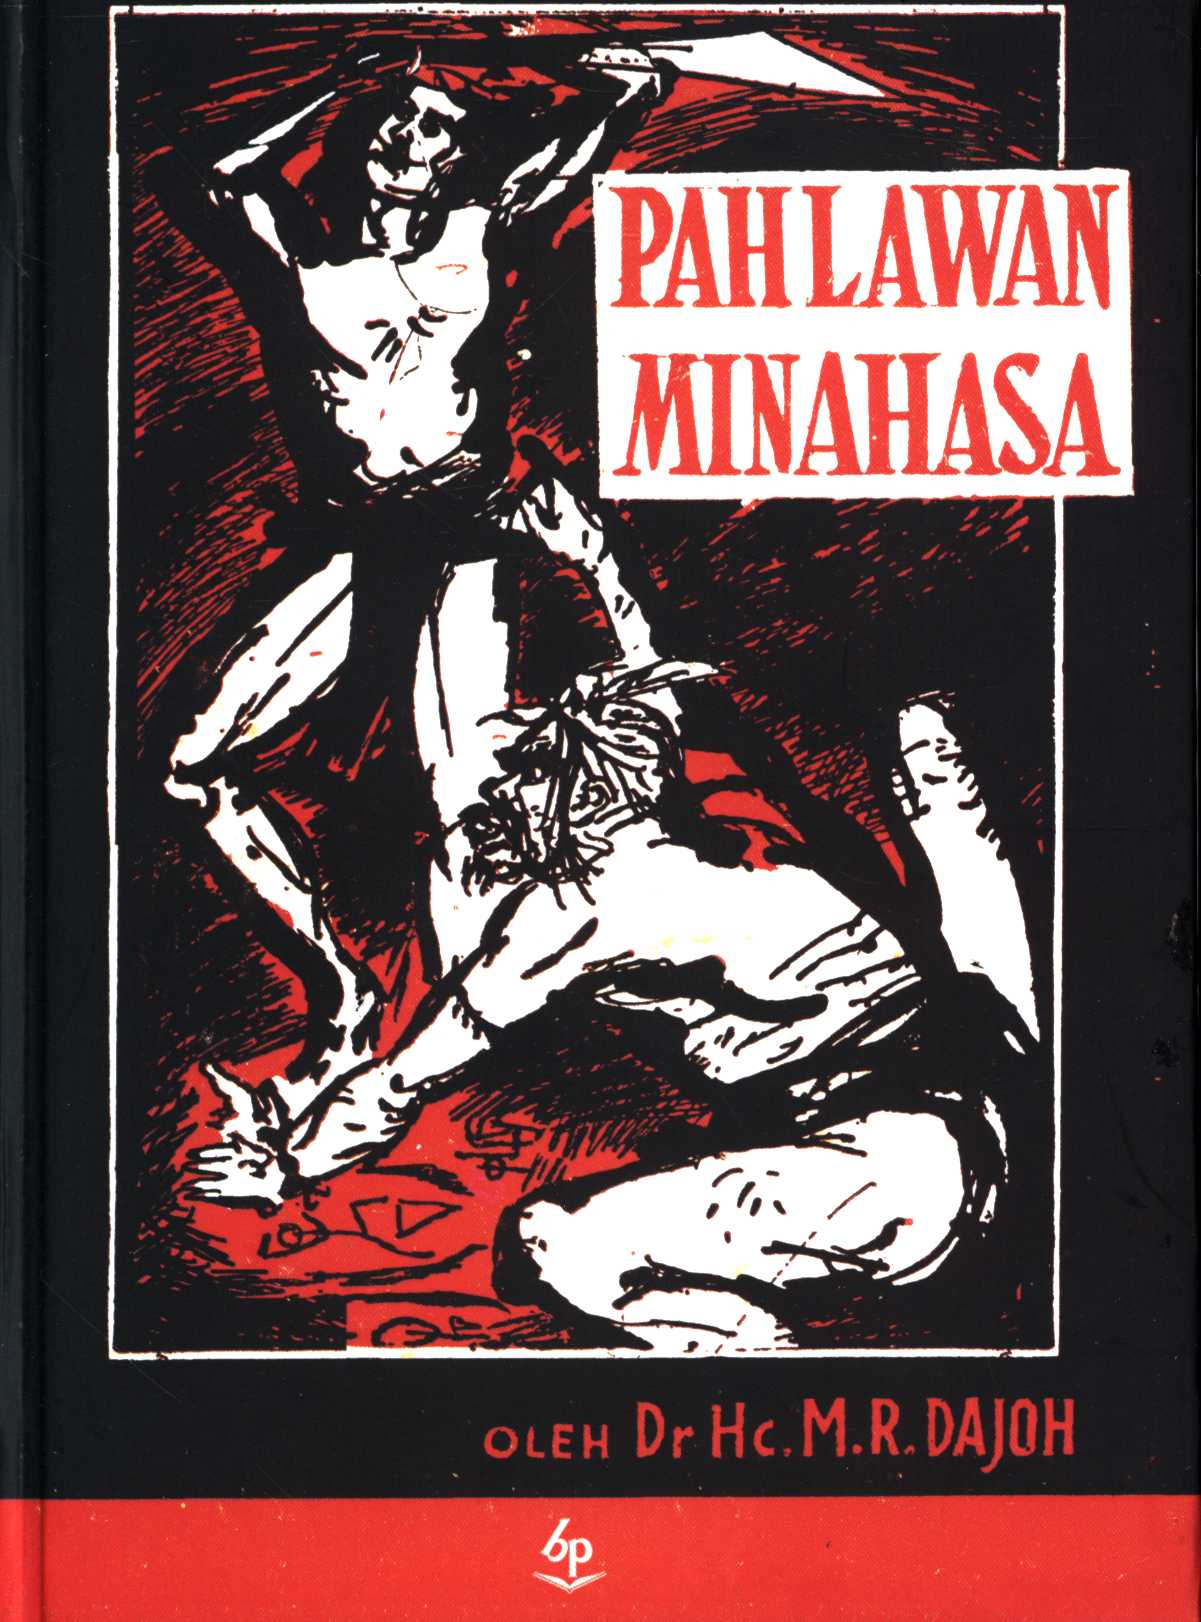 Pahlawan Minahasa